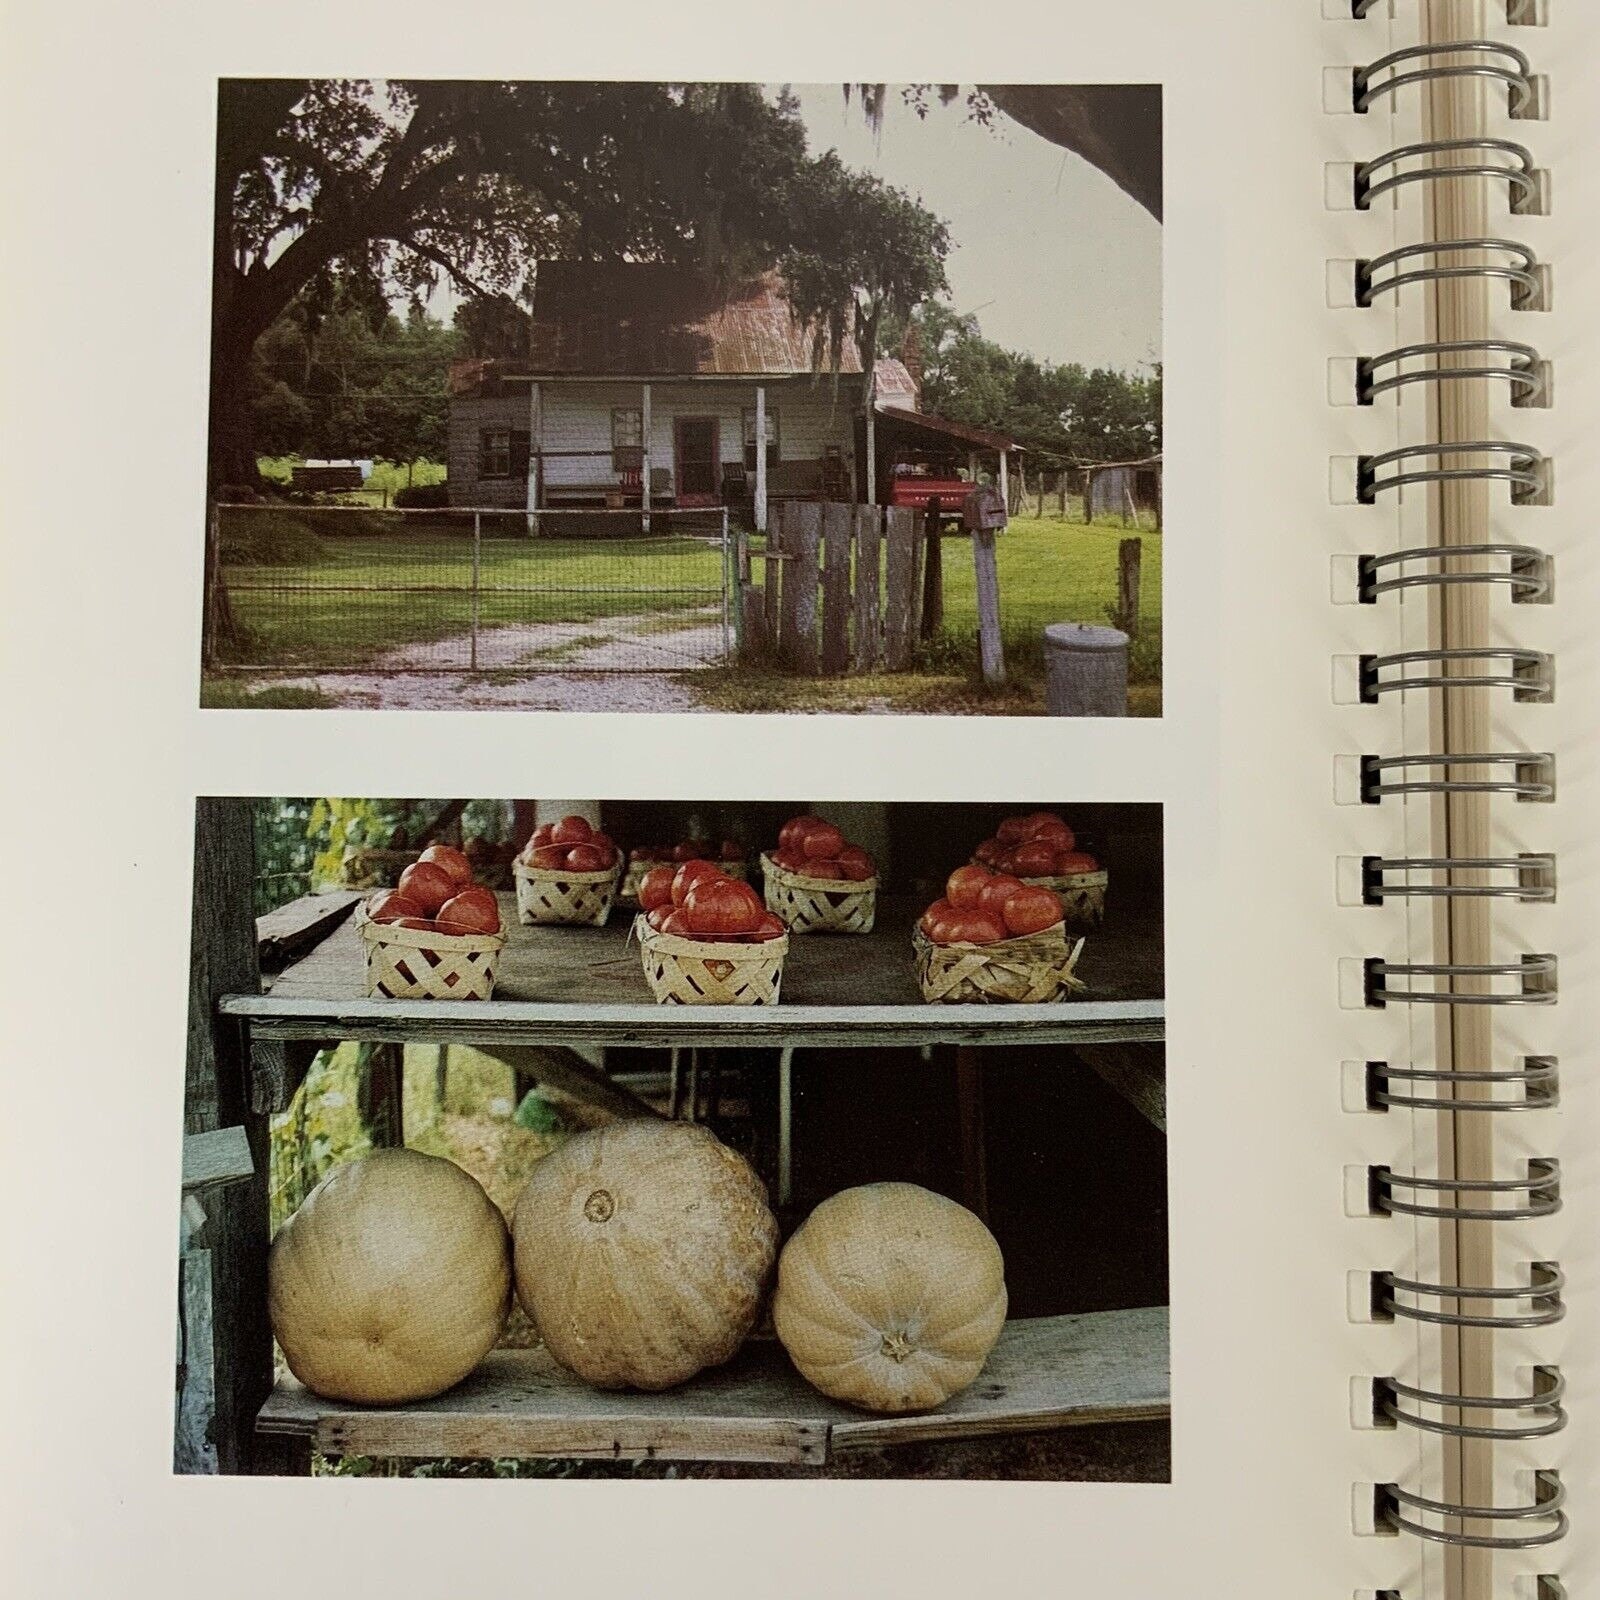 White Trash Cooking Cookbook by Ernest Matthew Mickler Spiral -   Singapore